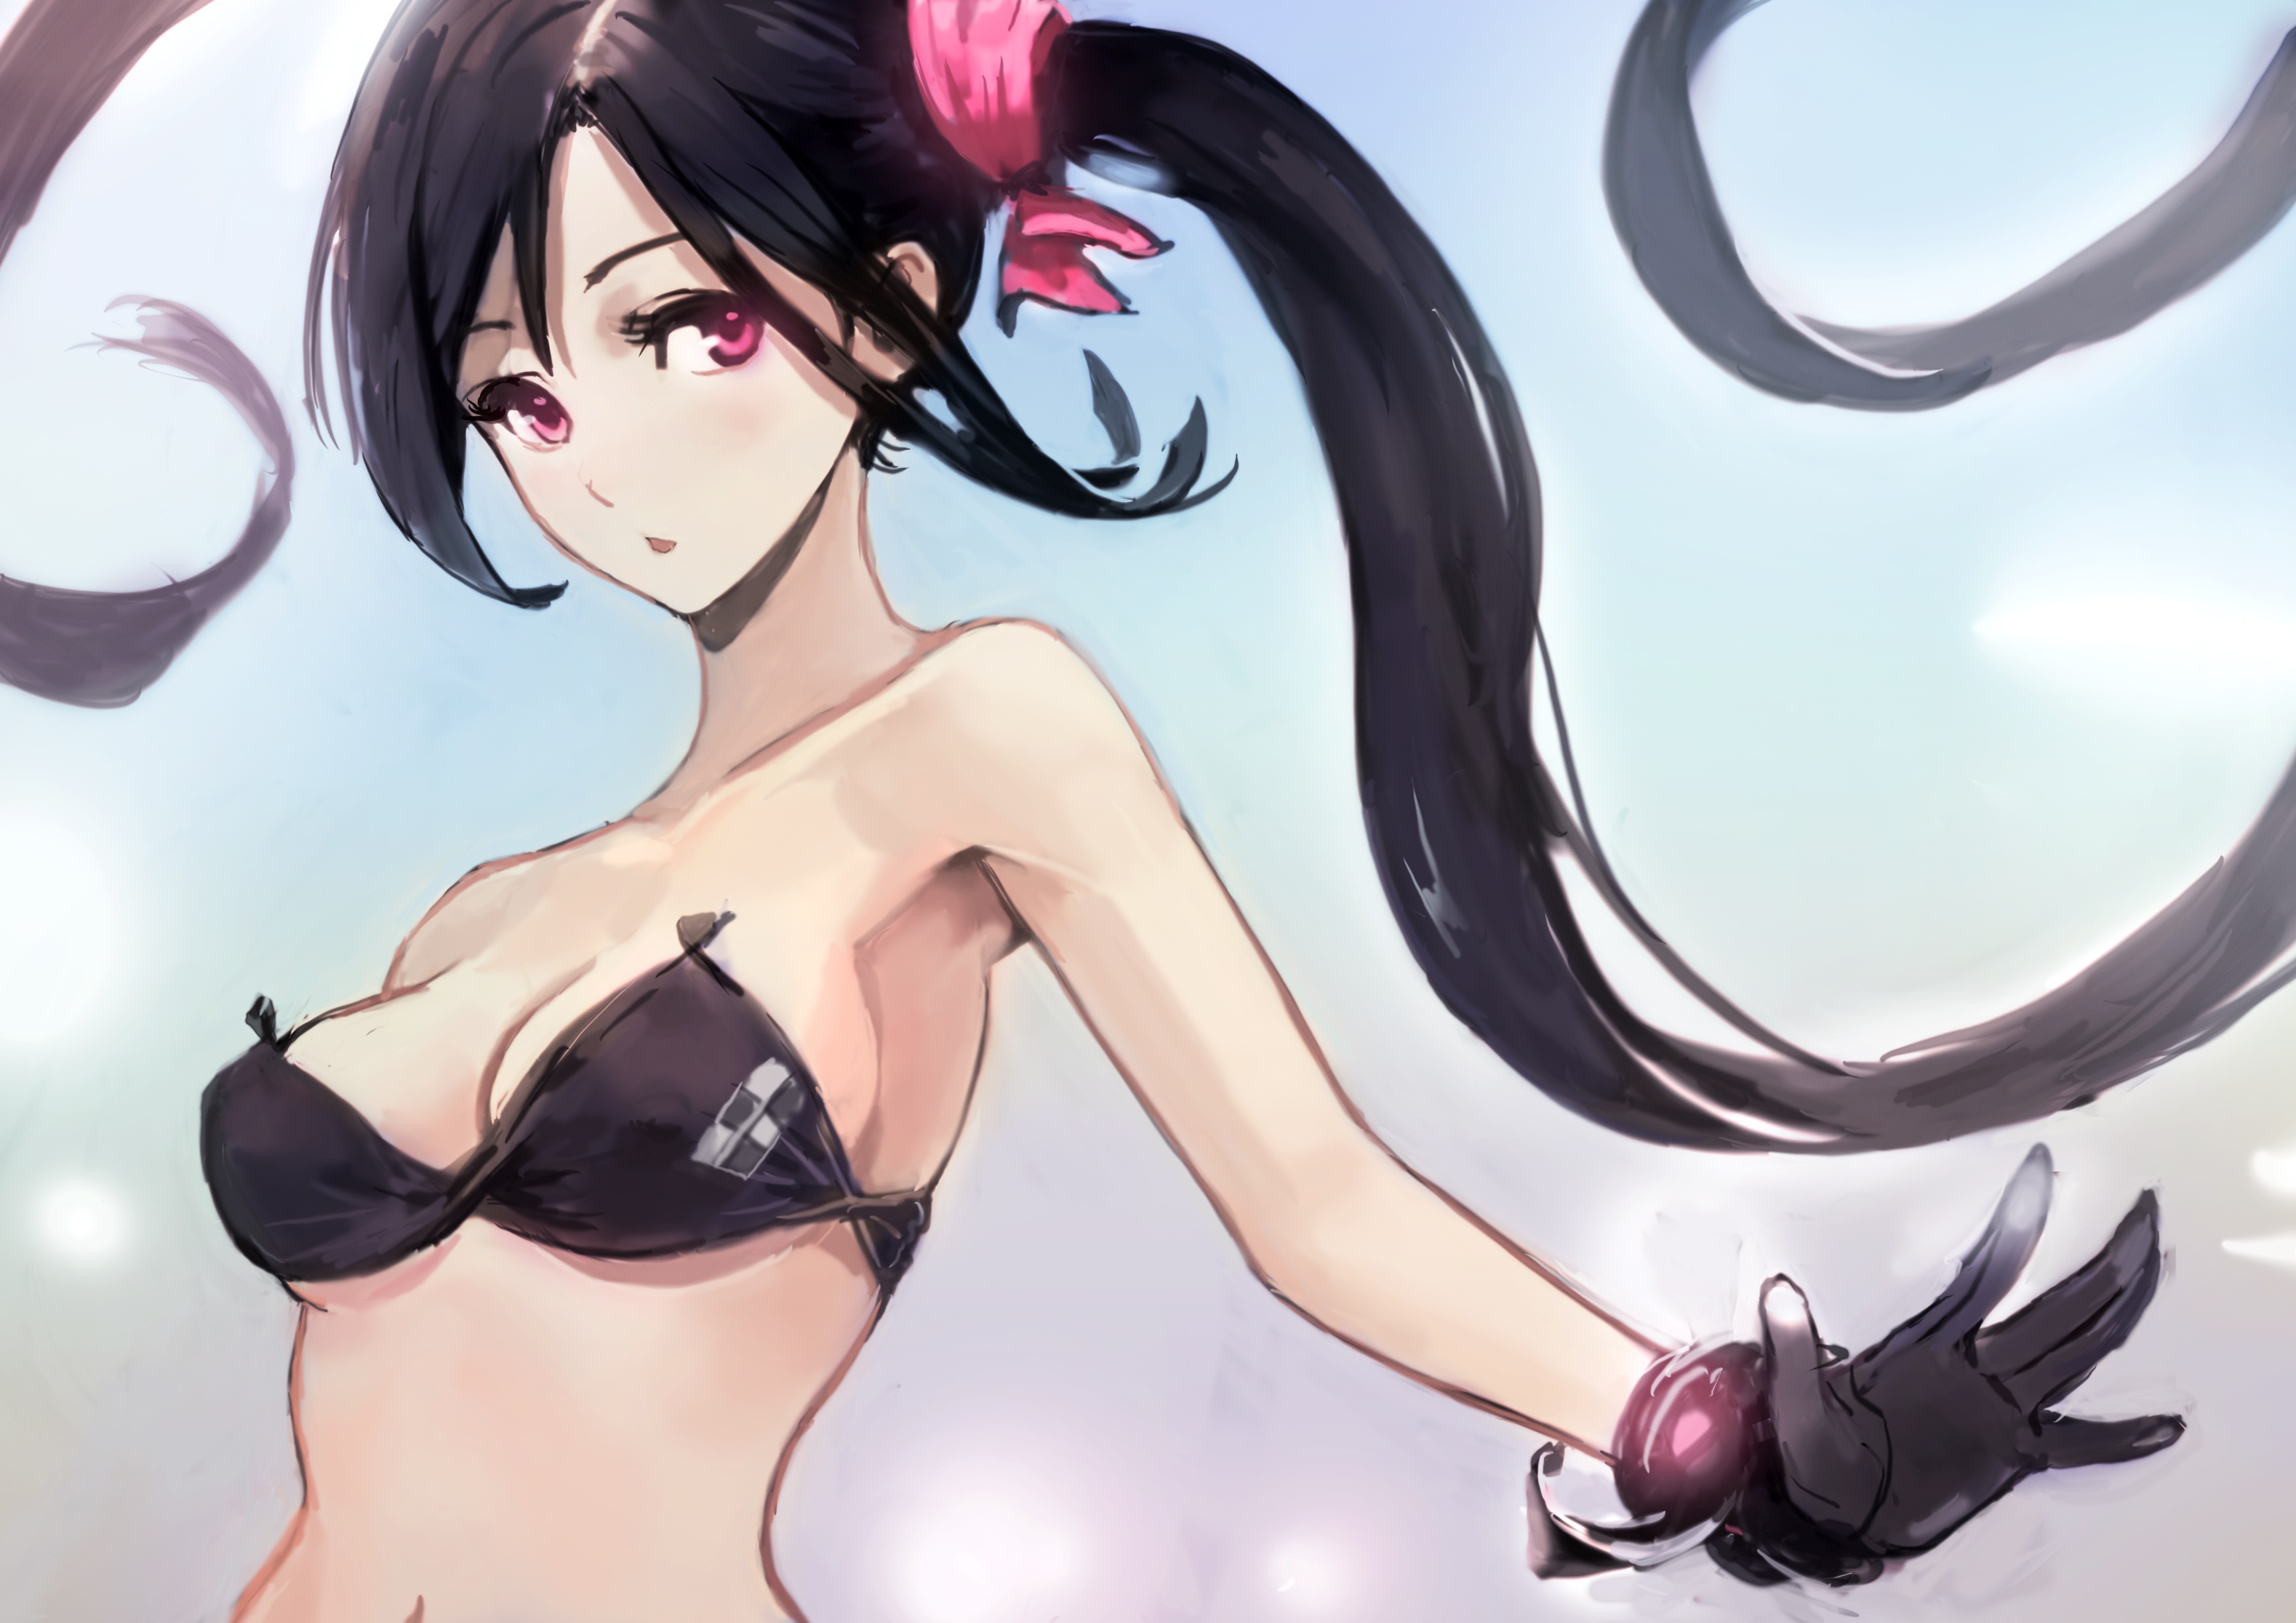 Anime girl in a black swimsuit.